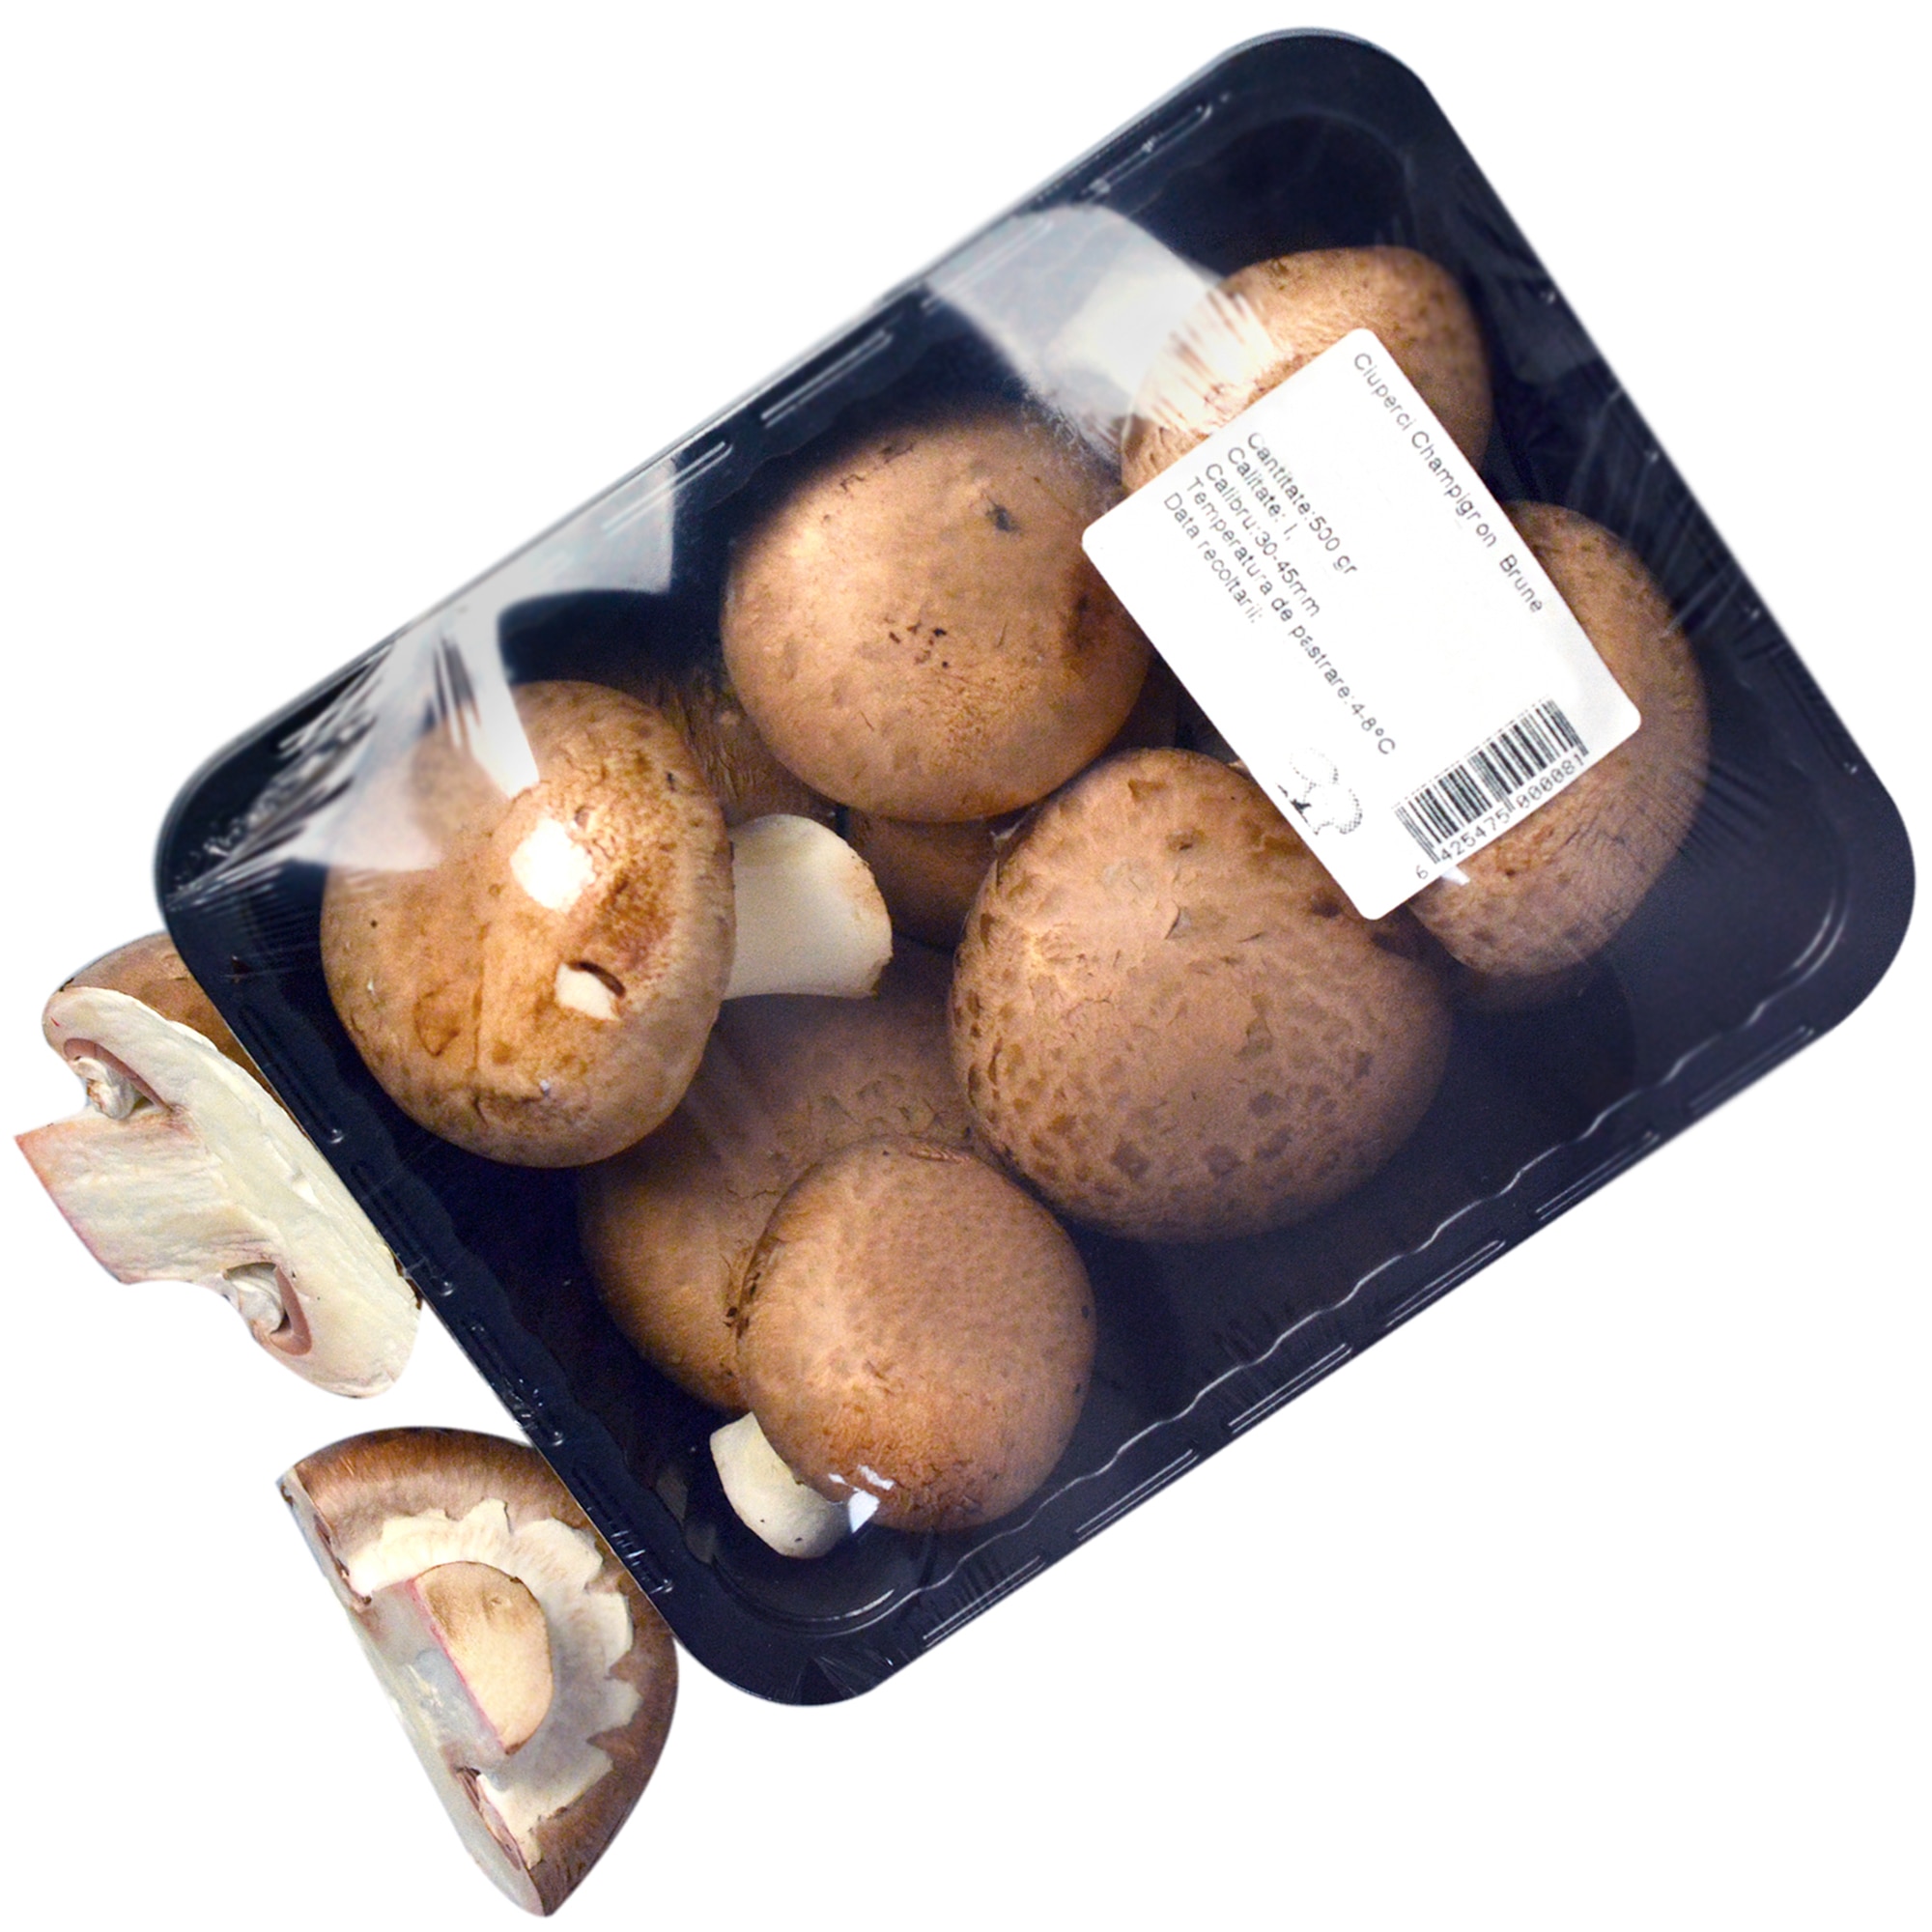 Ciuperci Kaufland - preț, oferta | genunetwork.ro - Ciuperci kaufland pret